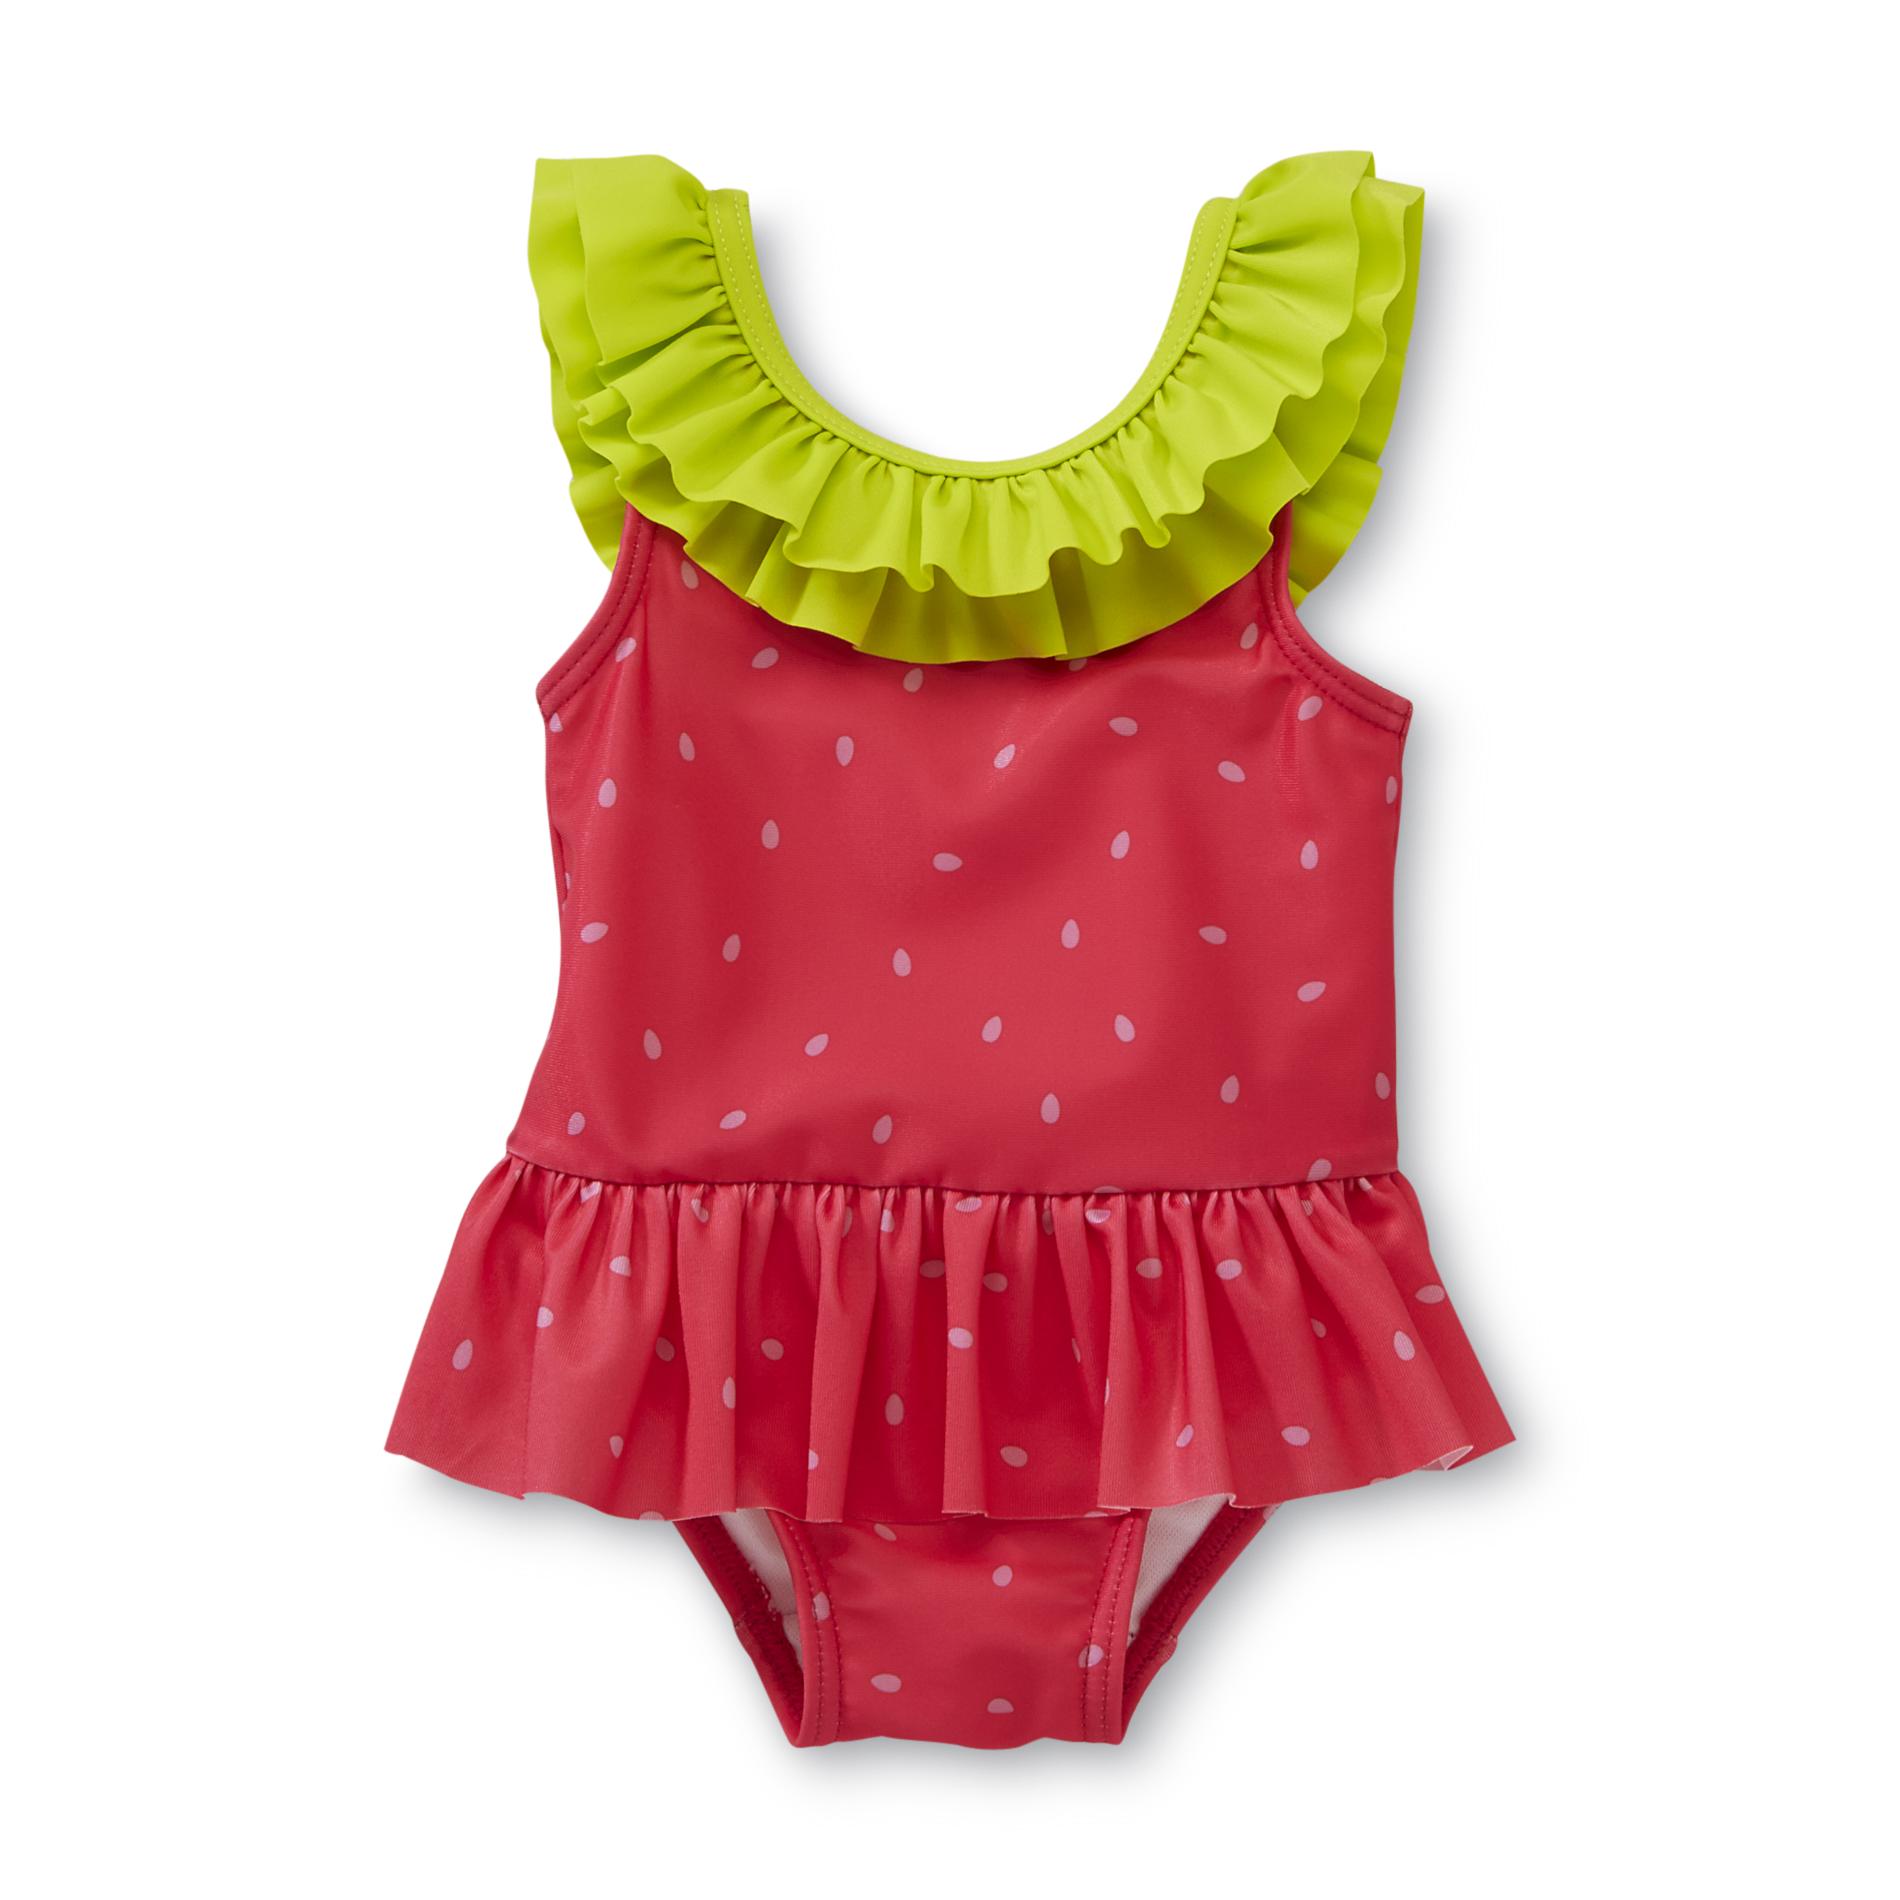 Small Wonders Newborn Girl's One-Piece Swimsuit - Polka Dot